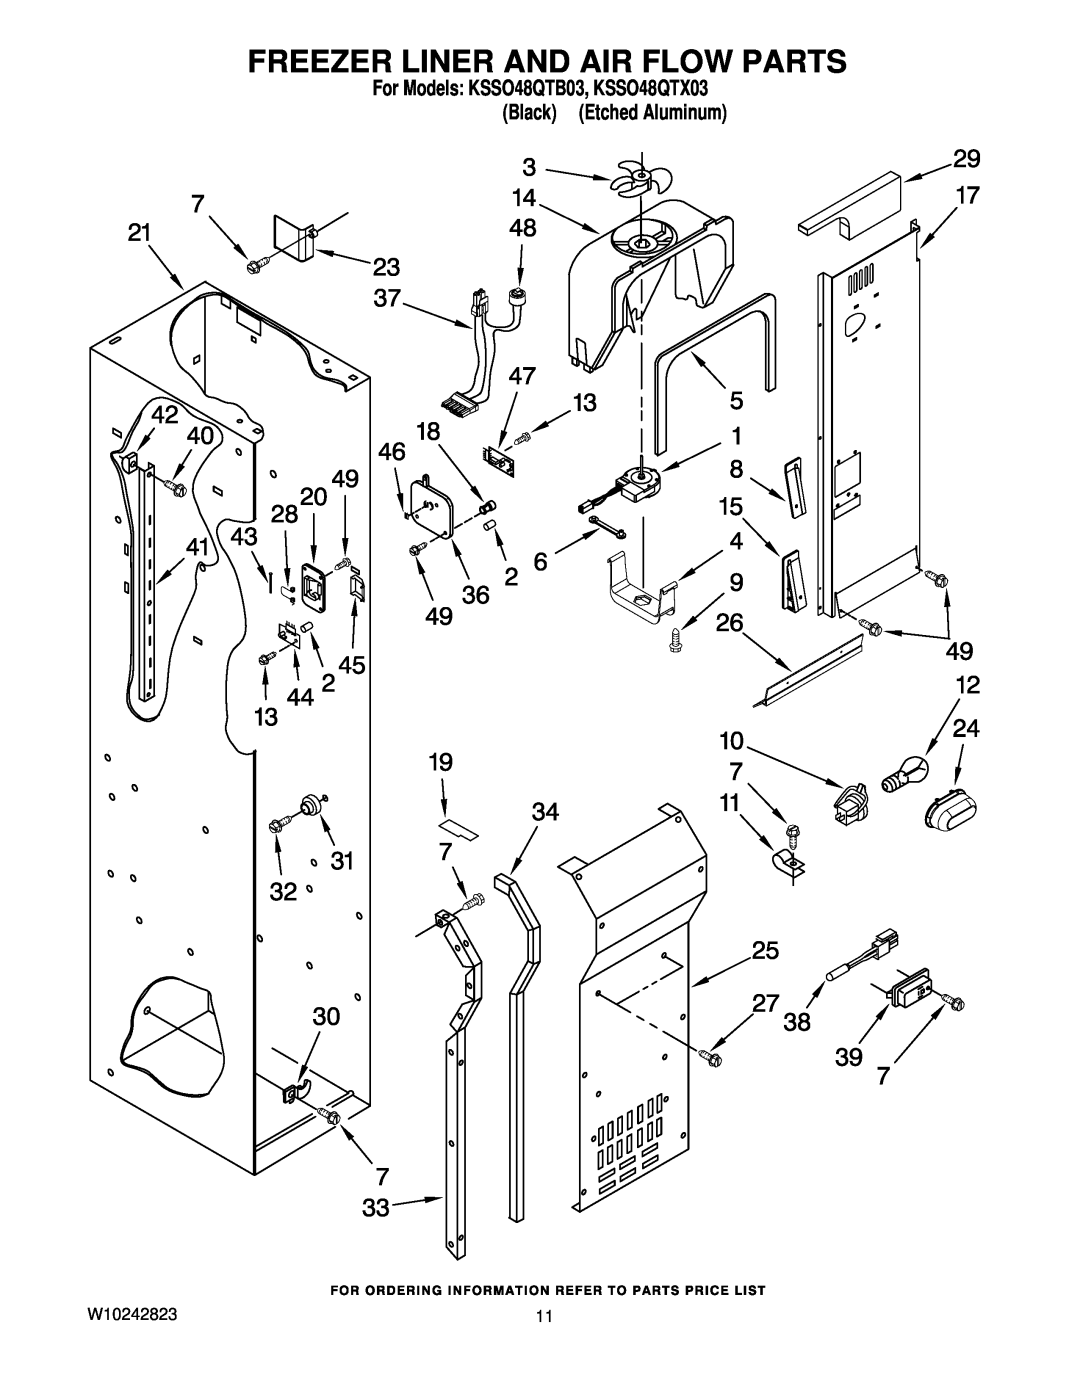 KitchenAid manual Freezer Liner And Air Flow Parts, For Models KSSO48QTB03, KSSO48QTX03 Black Etched Aluminum 